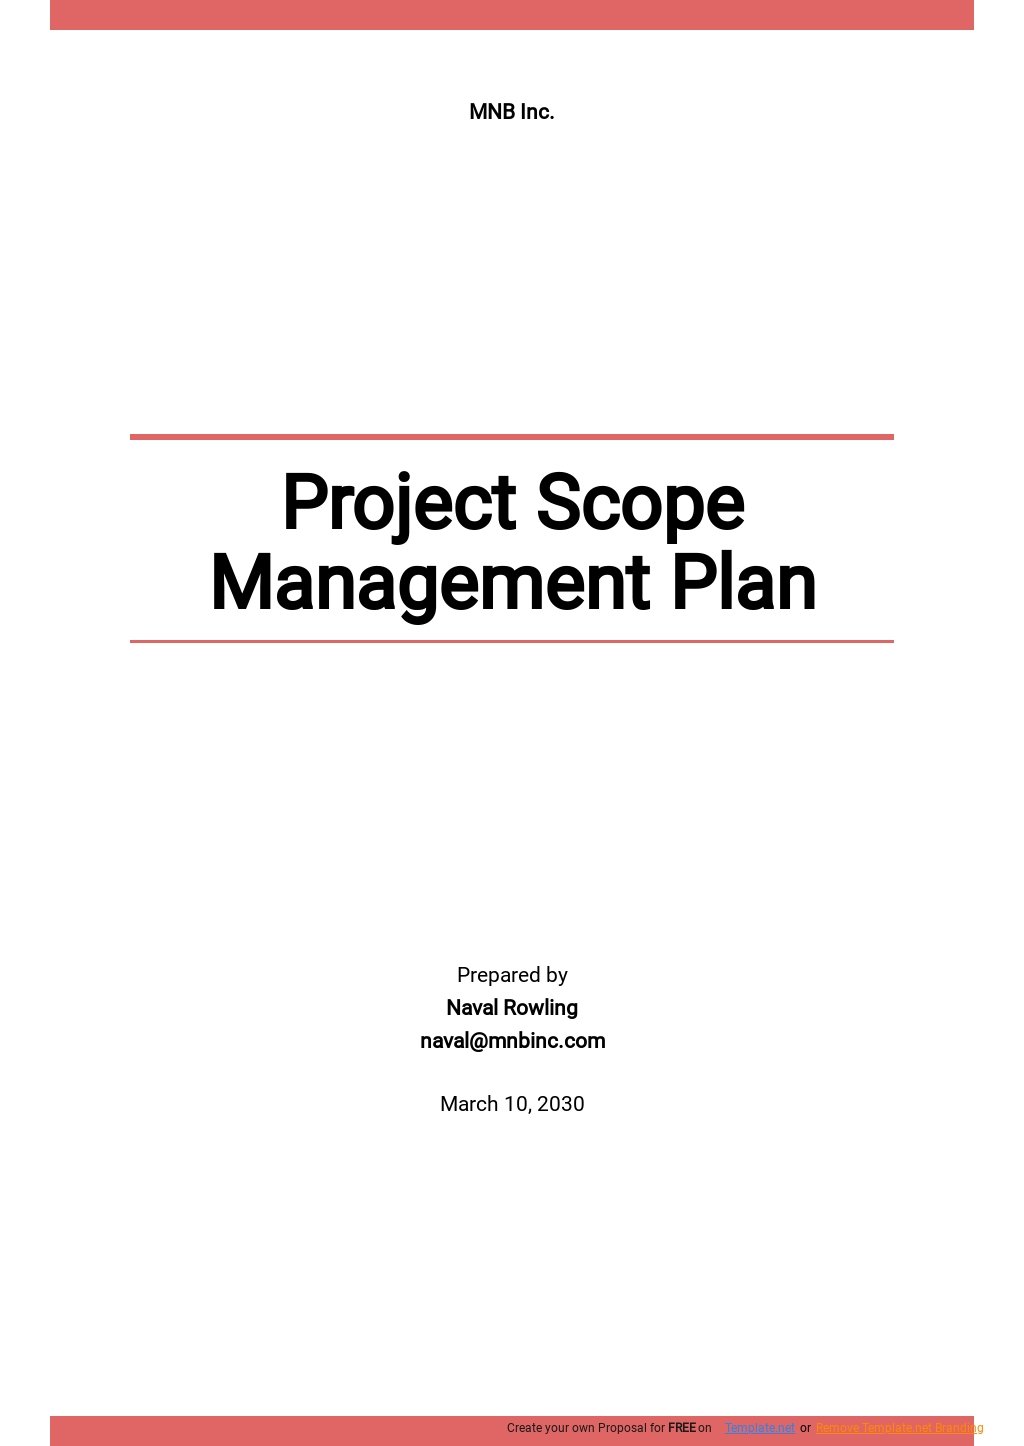 Project Scope Management Plan Template.jpe